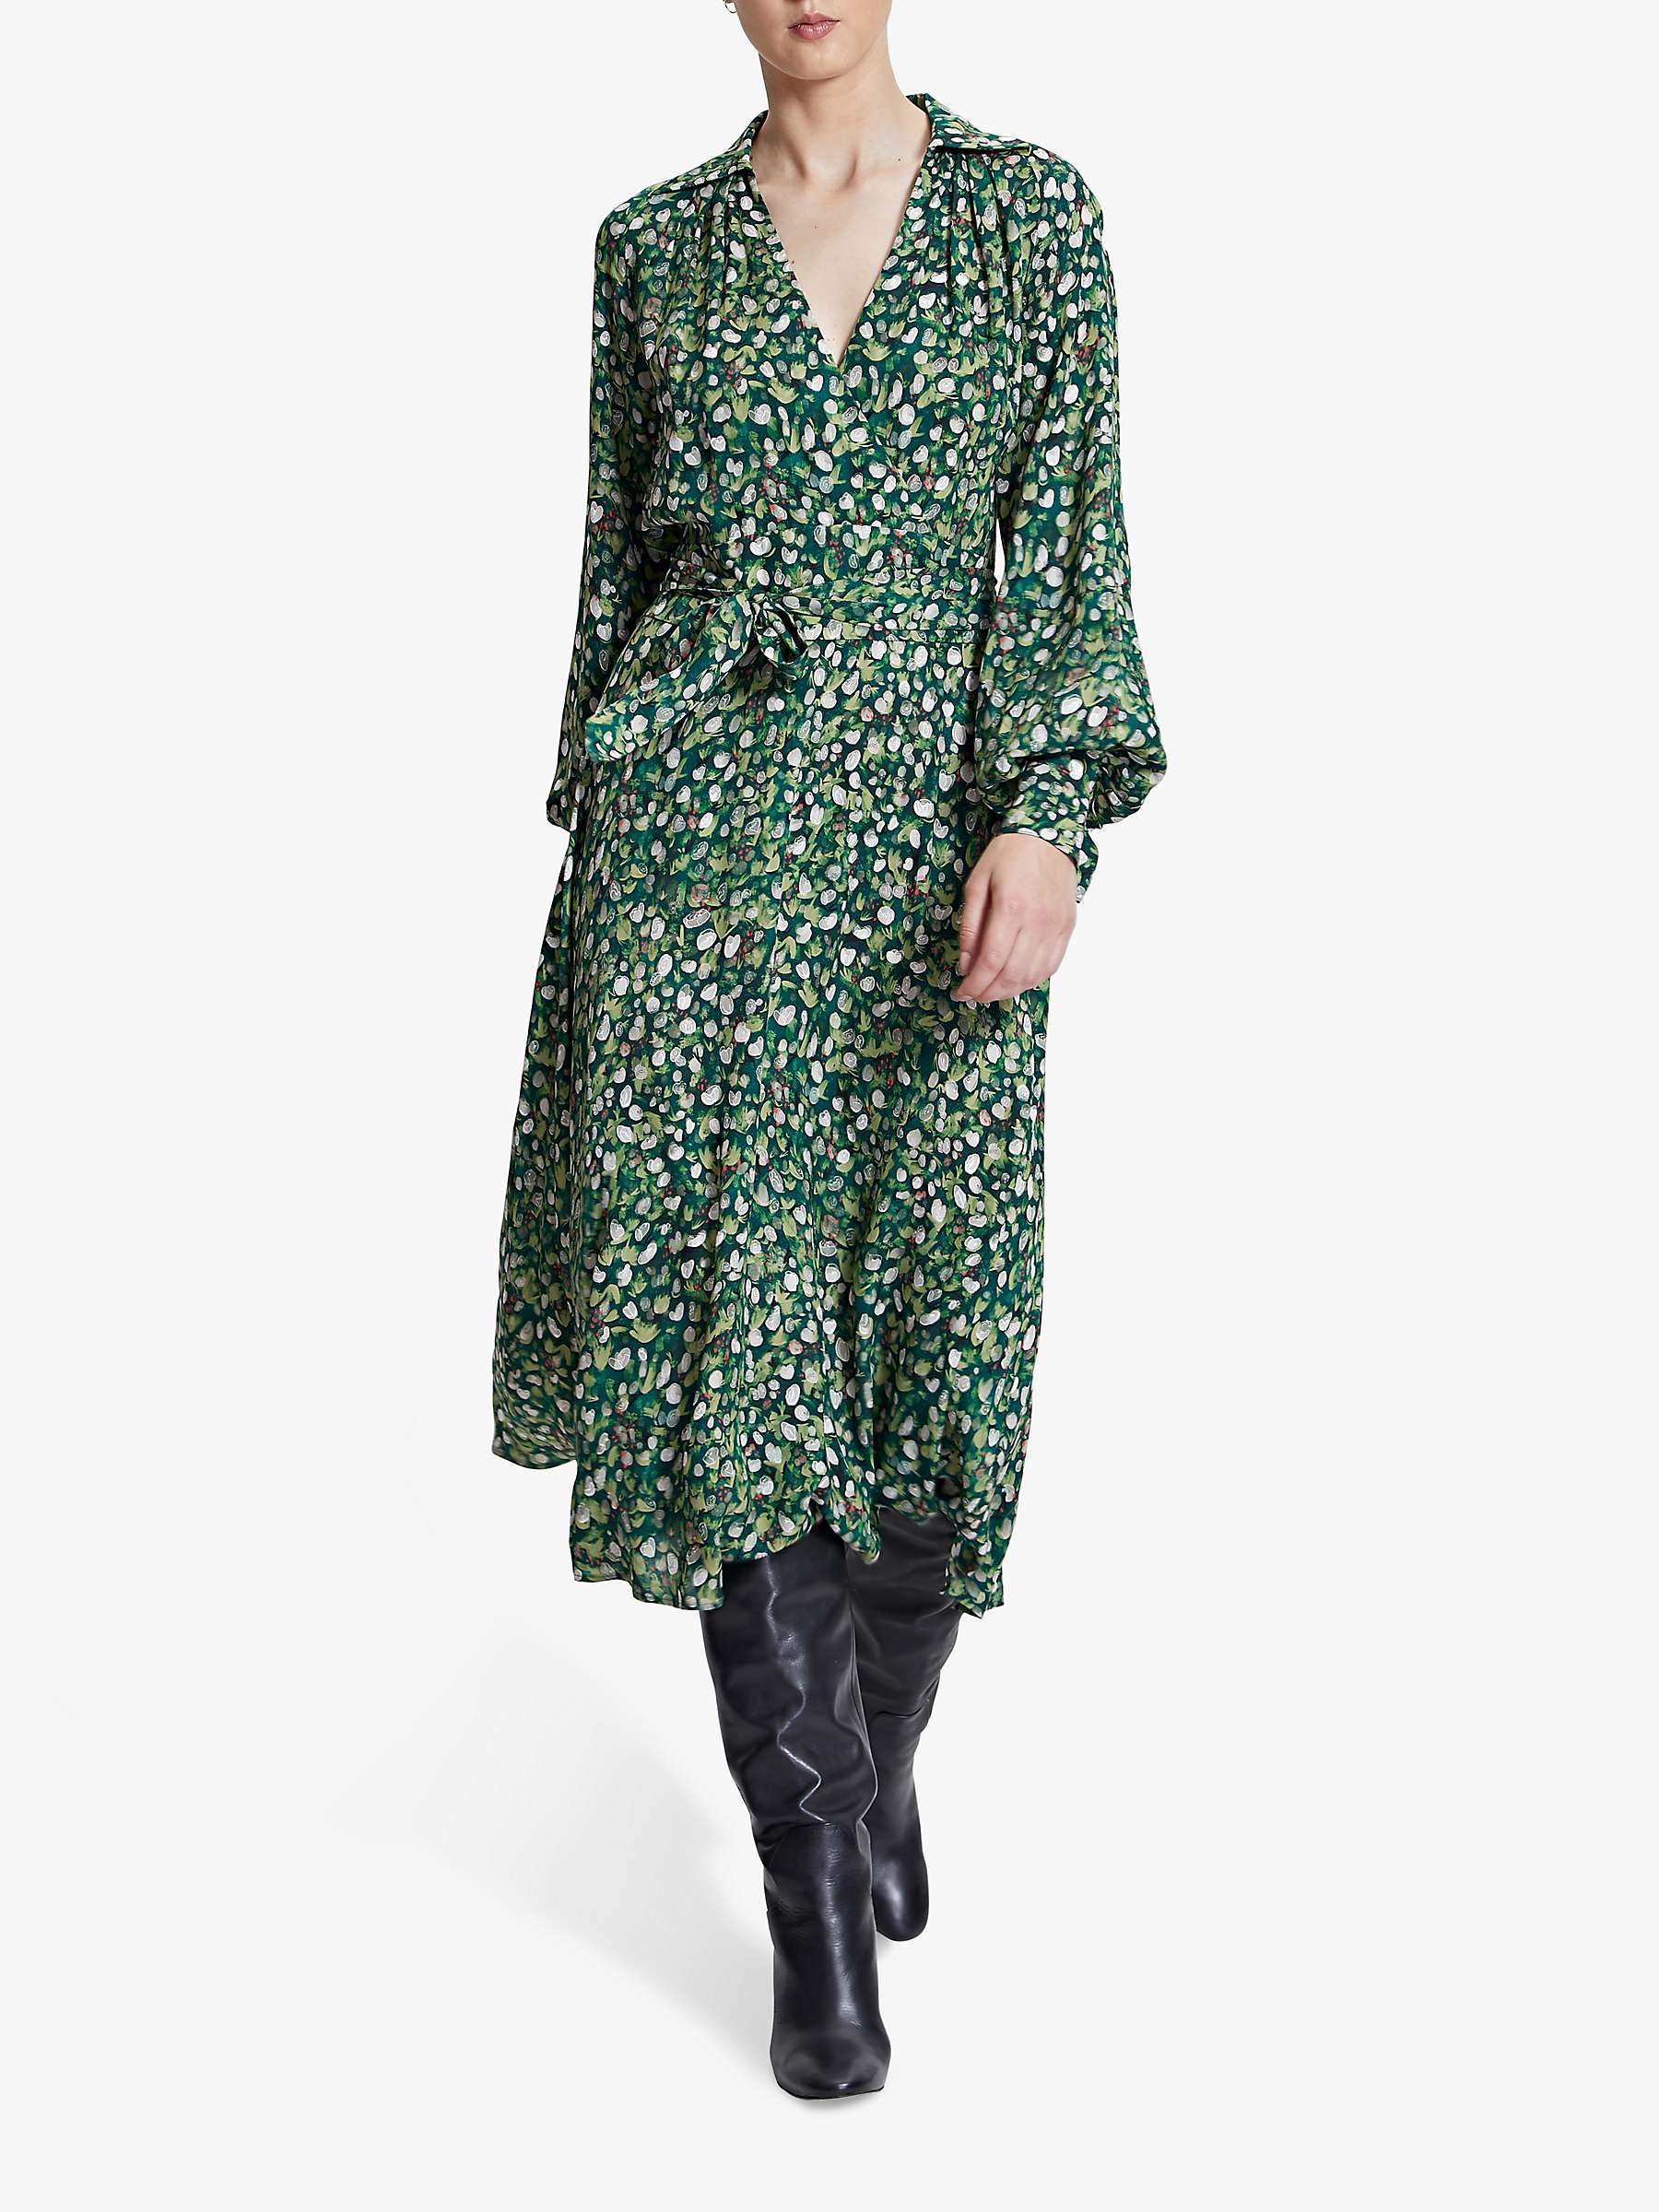 Winser London Rose Wrap Dress, Green/Multi at John Lewis \u0026 Partners